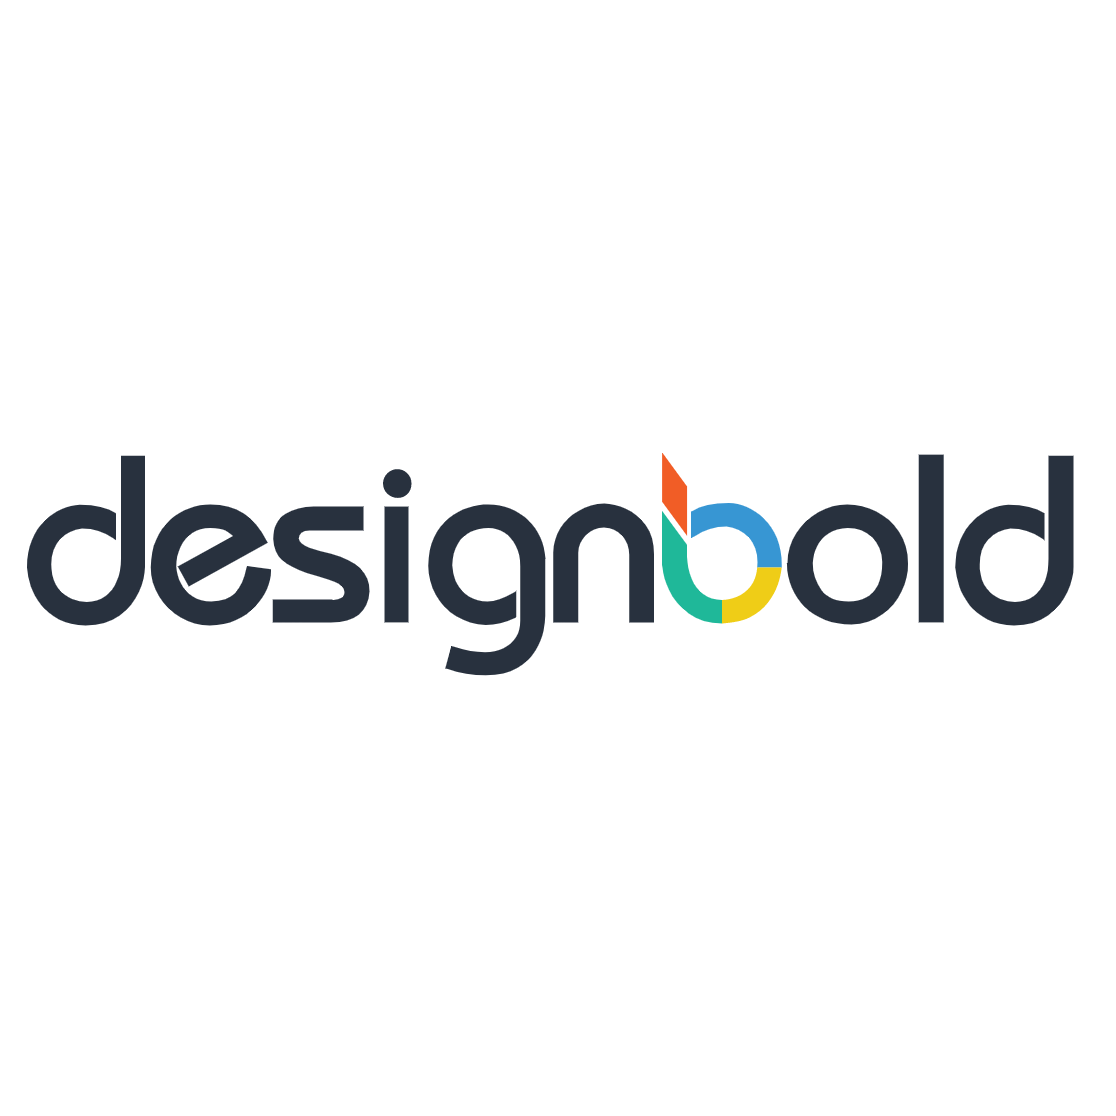 DesignBold logo